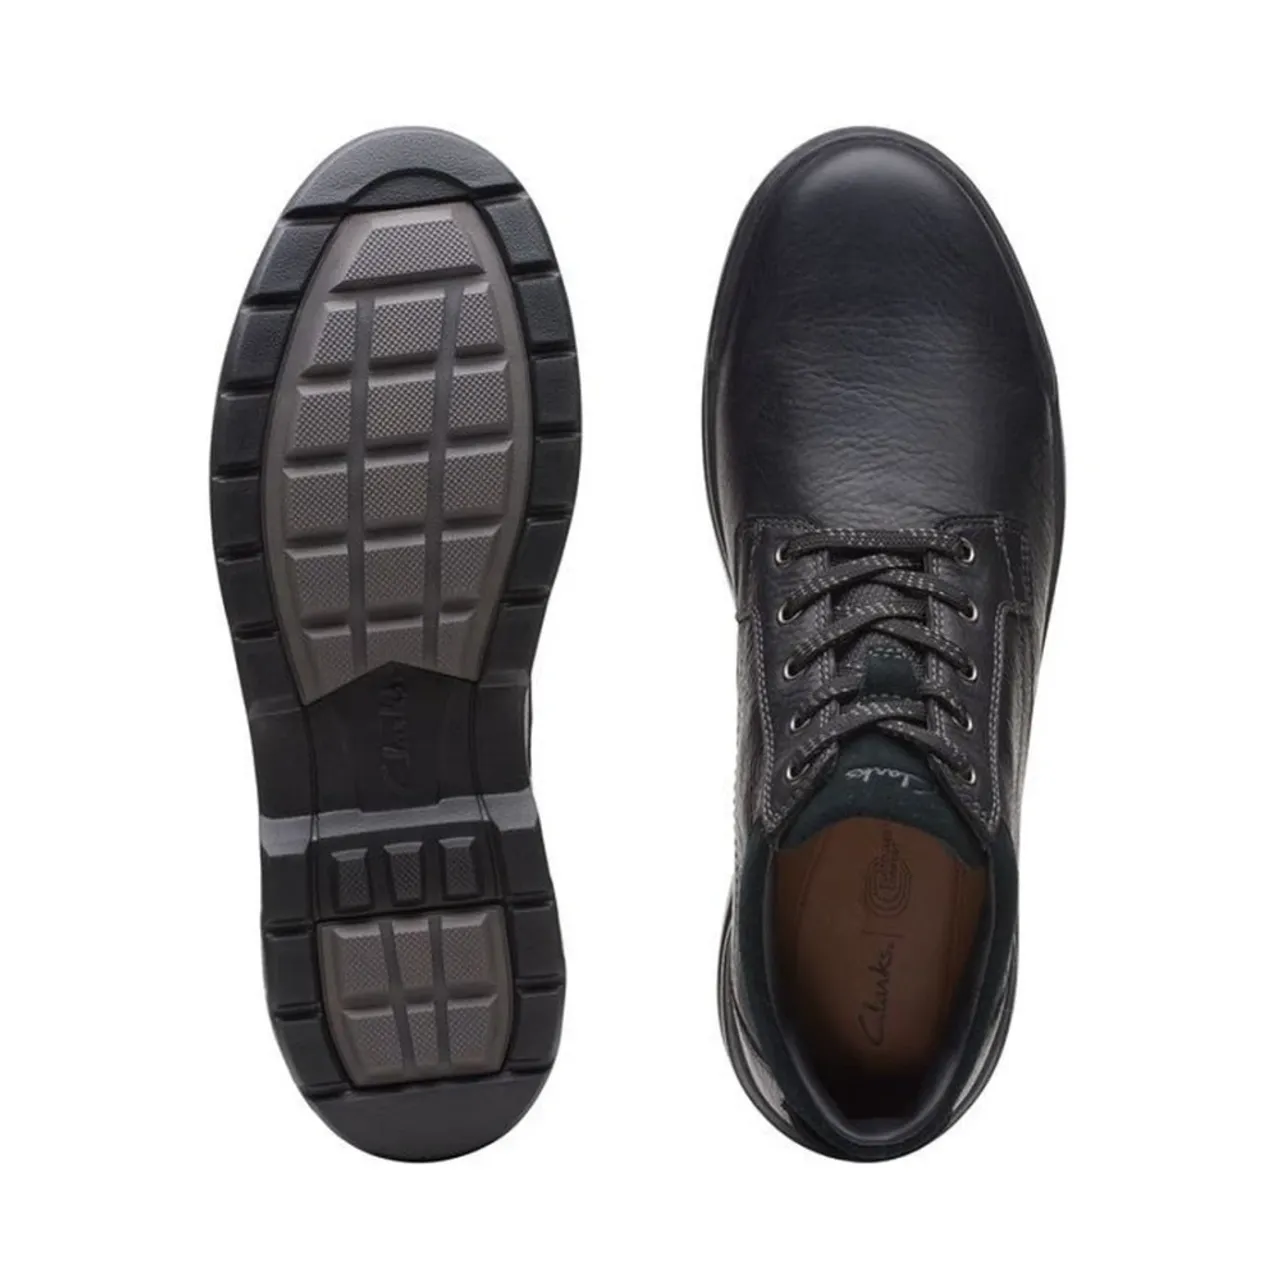 Clarks , Black Upgtx Ankle Boots for Men ,Black male, Sizes: